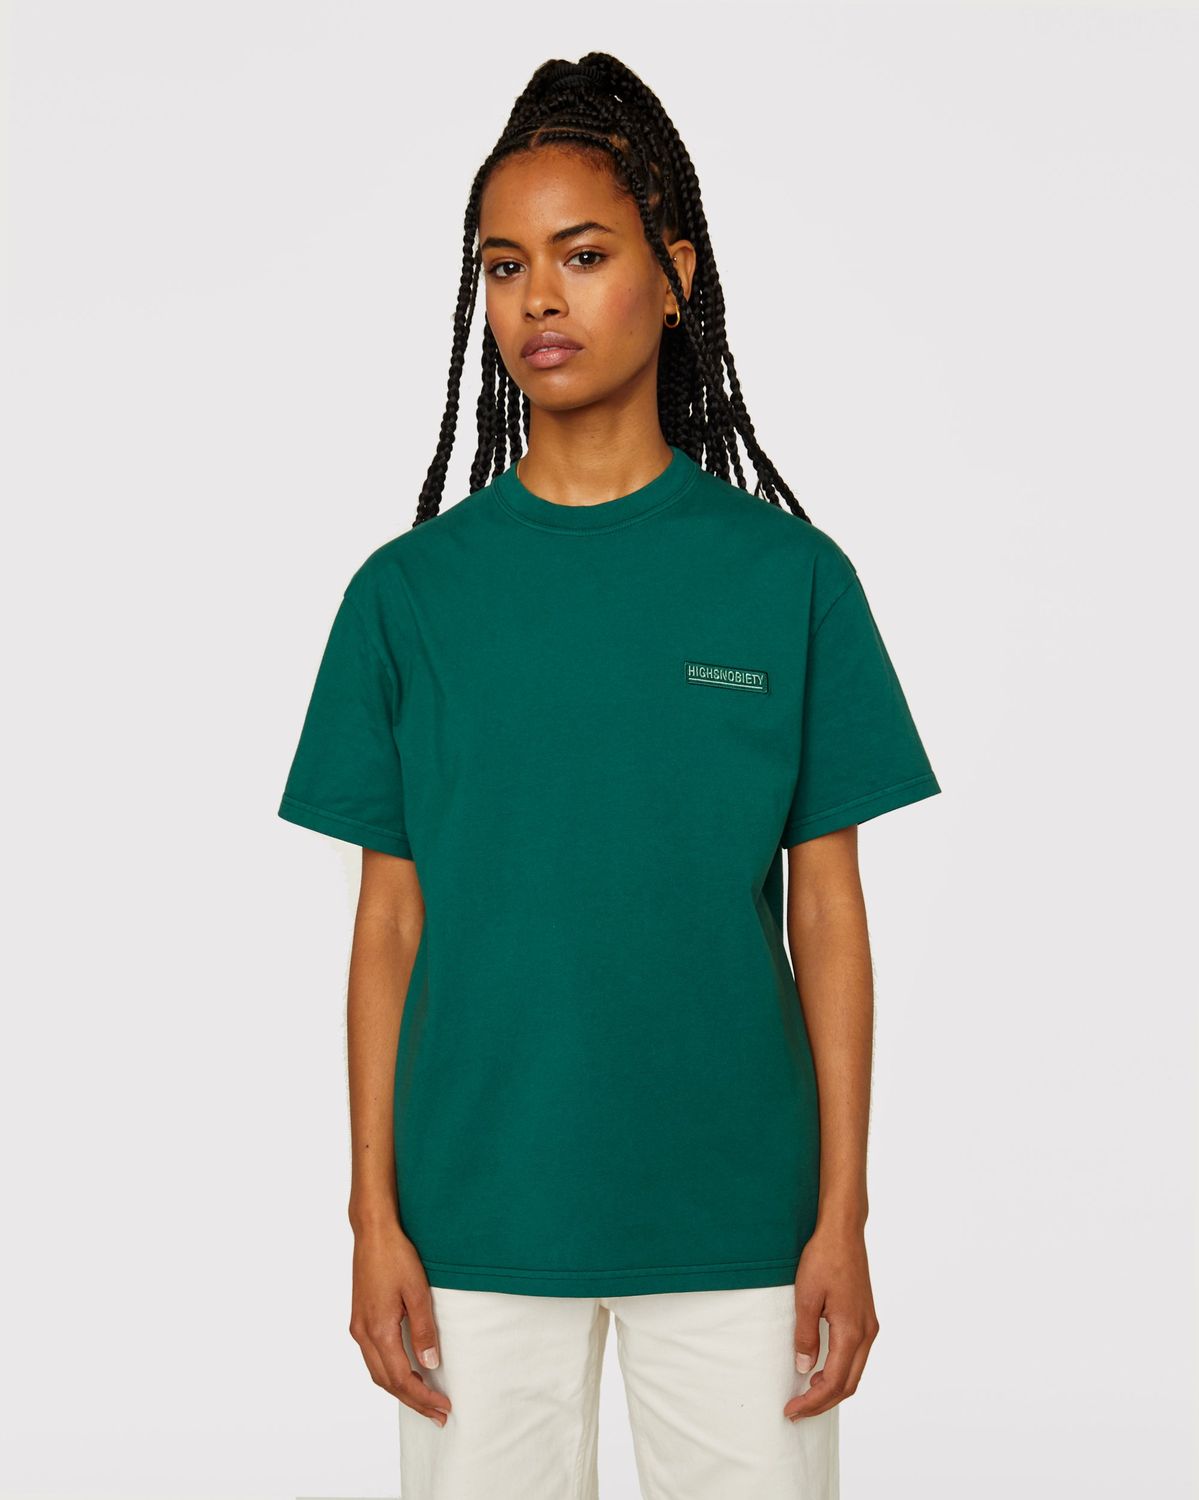 Highsnobiety – Staples T-Shirt Green - T-Shirts - Green - Image 6